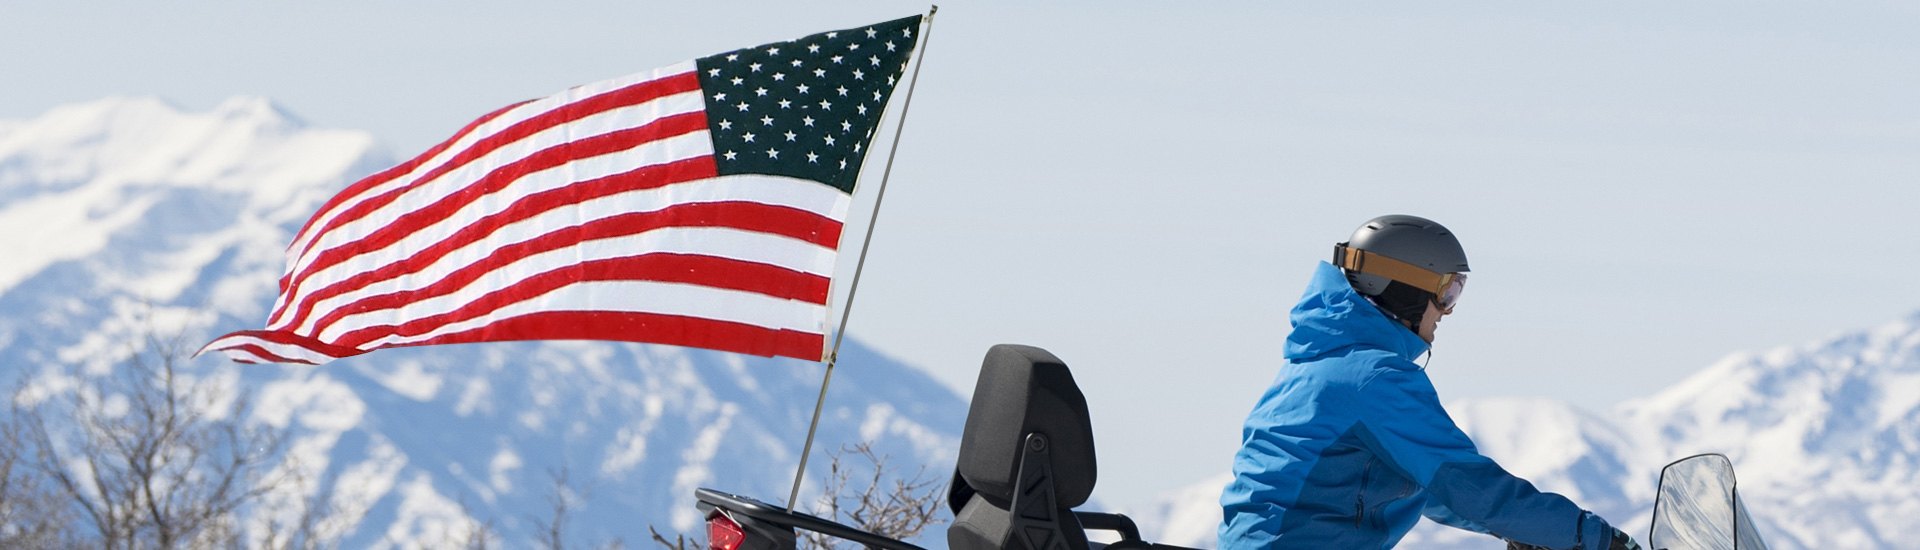 Ski Doo FLAG BANNER 3x10ft DRAPEAU MAN CAVE GARAGE snowmobile sled summit